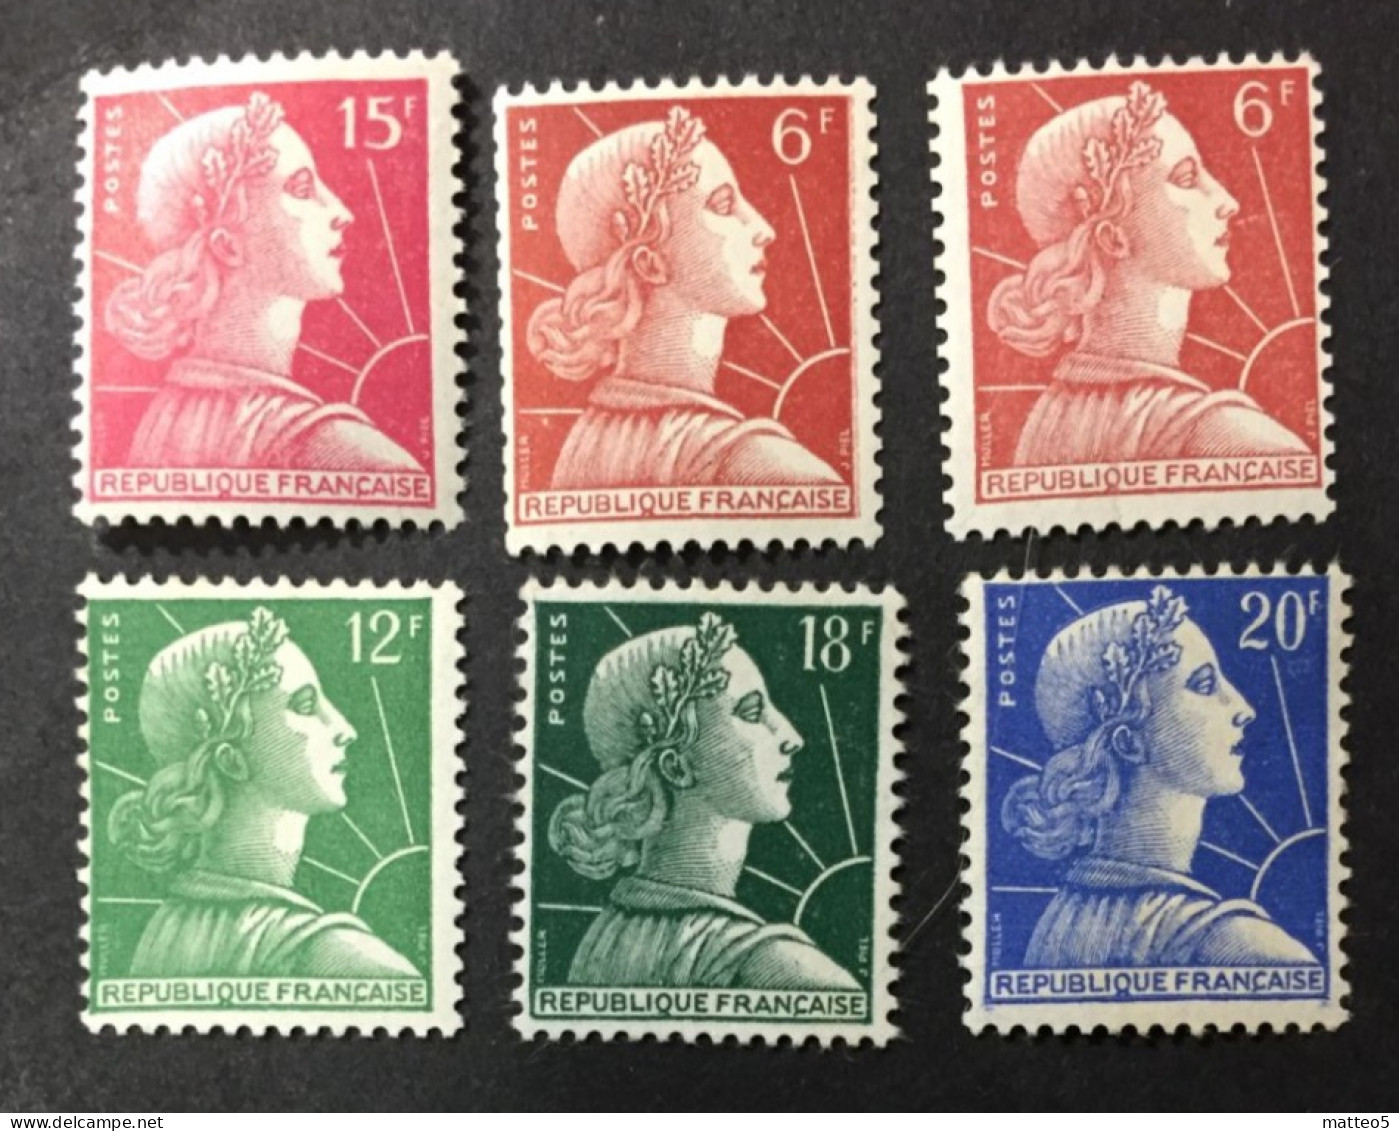 1955 /59  France - Liberty - Marianne De Muller - 6  Stamps Unused - 1955-1961 Marianne Of Muller